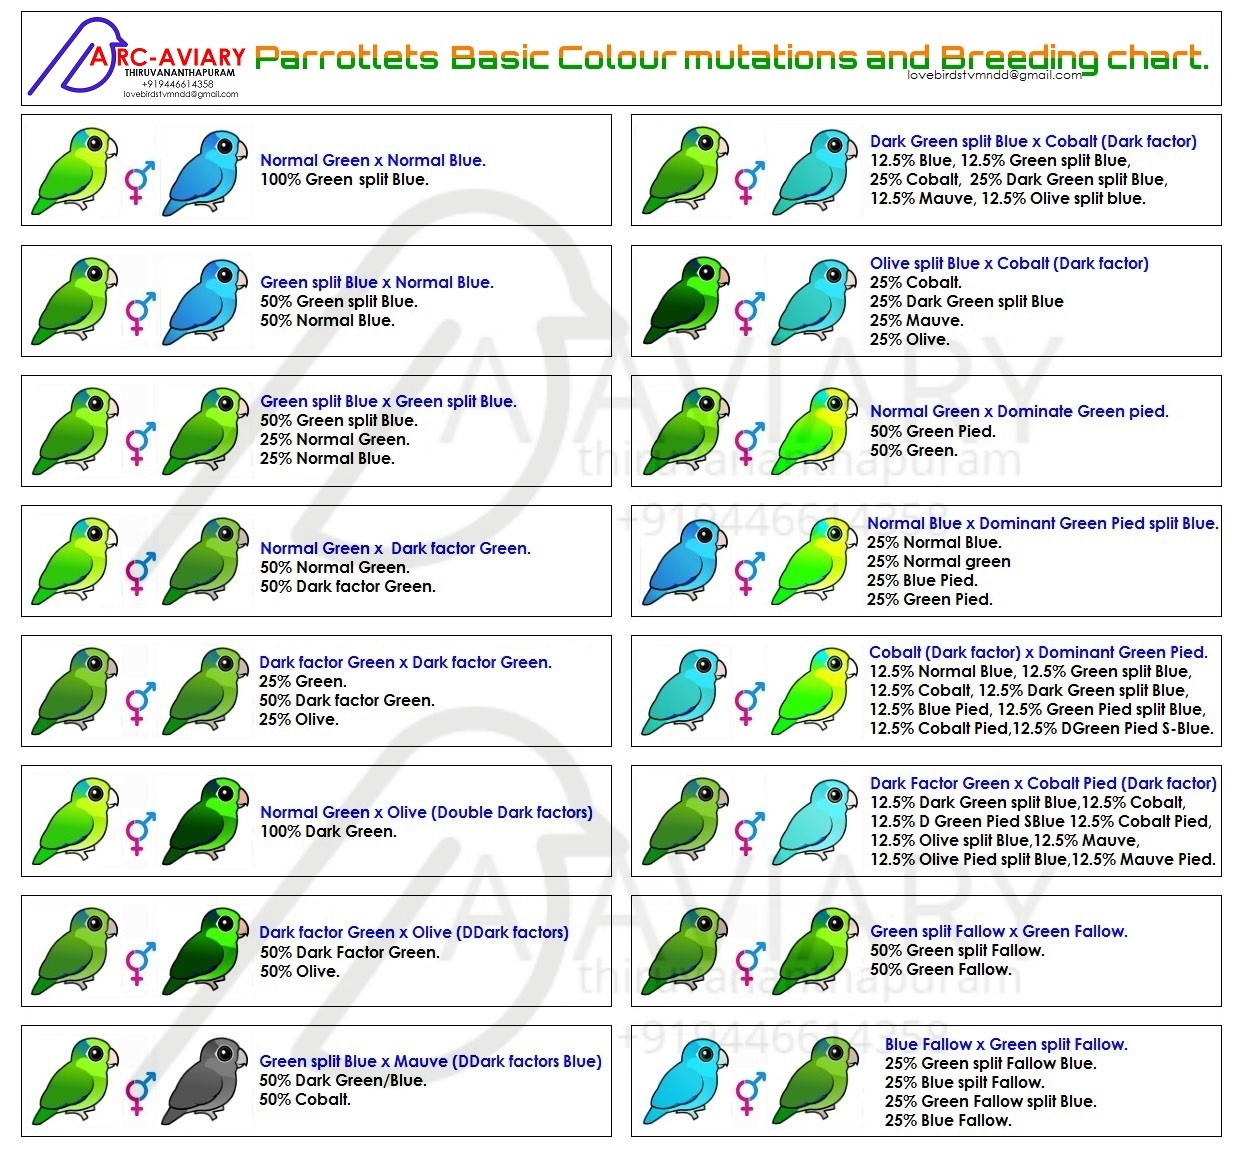 Green Cheek Conure Chart